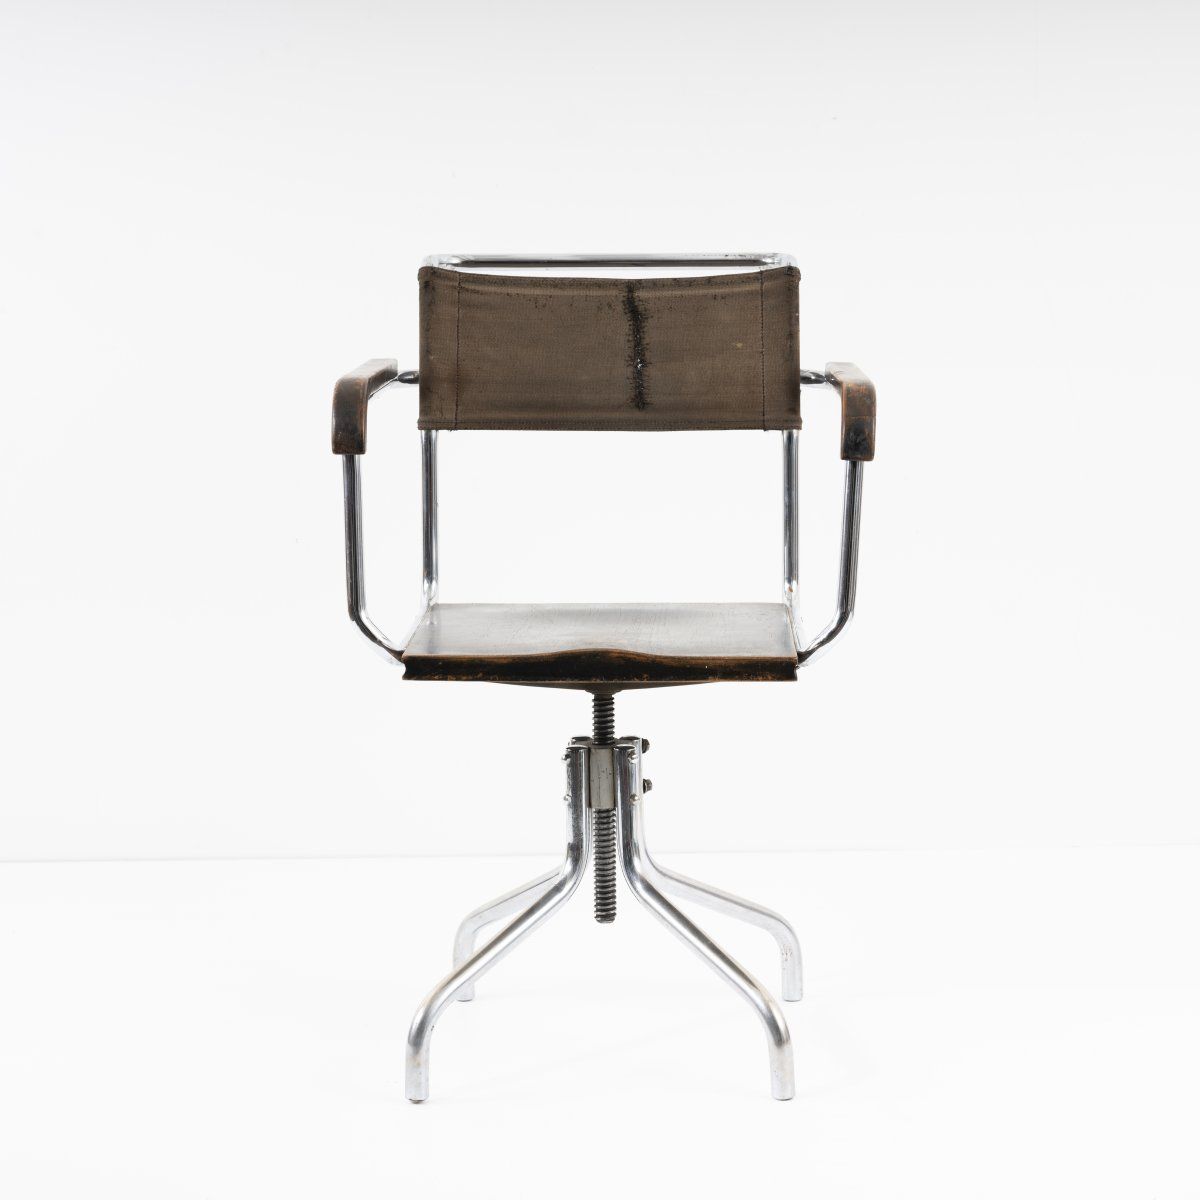 Null Marcel Breuer, 'B 7A' desk chair, c. 1930, H. 78-96 x 54 x 55.5 cm. Made by&hellip;